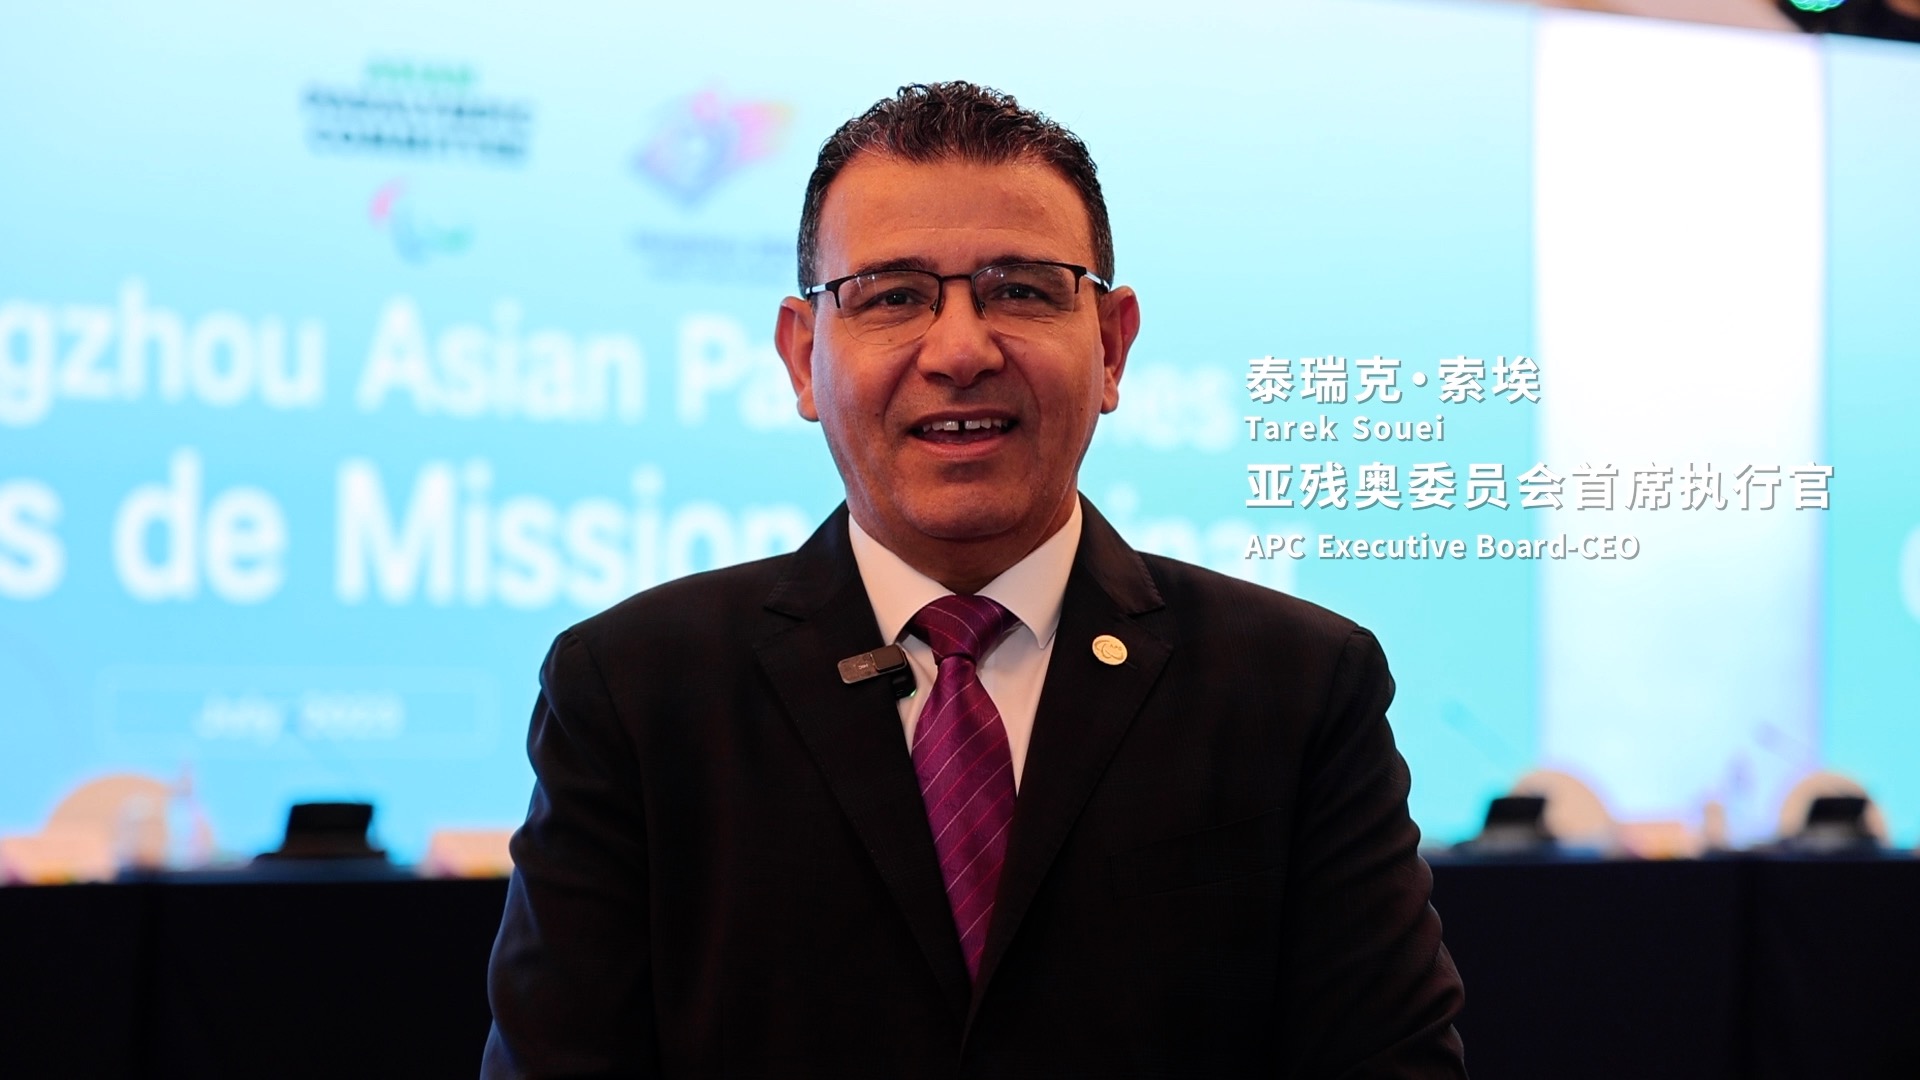 APC executive board CEO: Hangzhou is where hearts meet and dreams shine